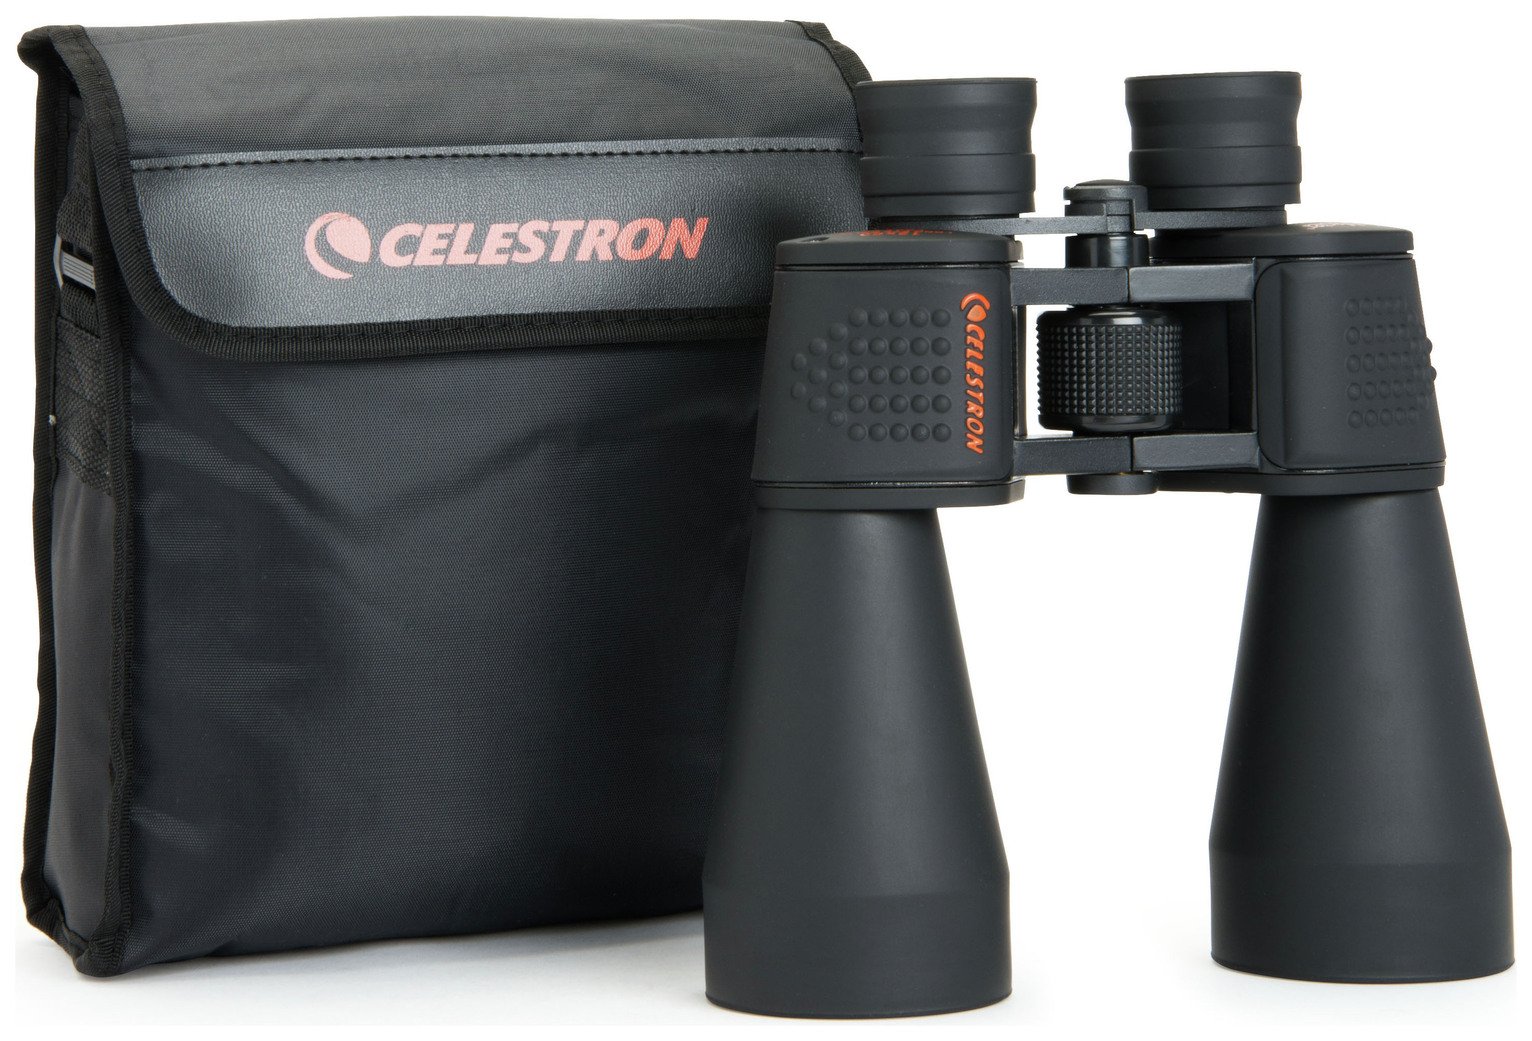 Celestron Skymaster 12x60 Binoculars Review